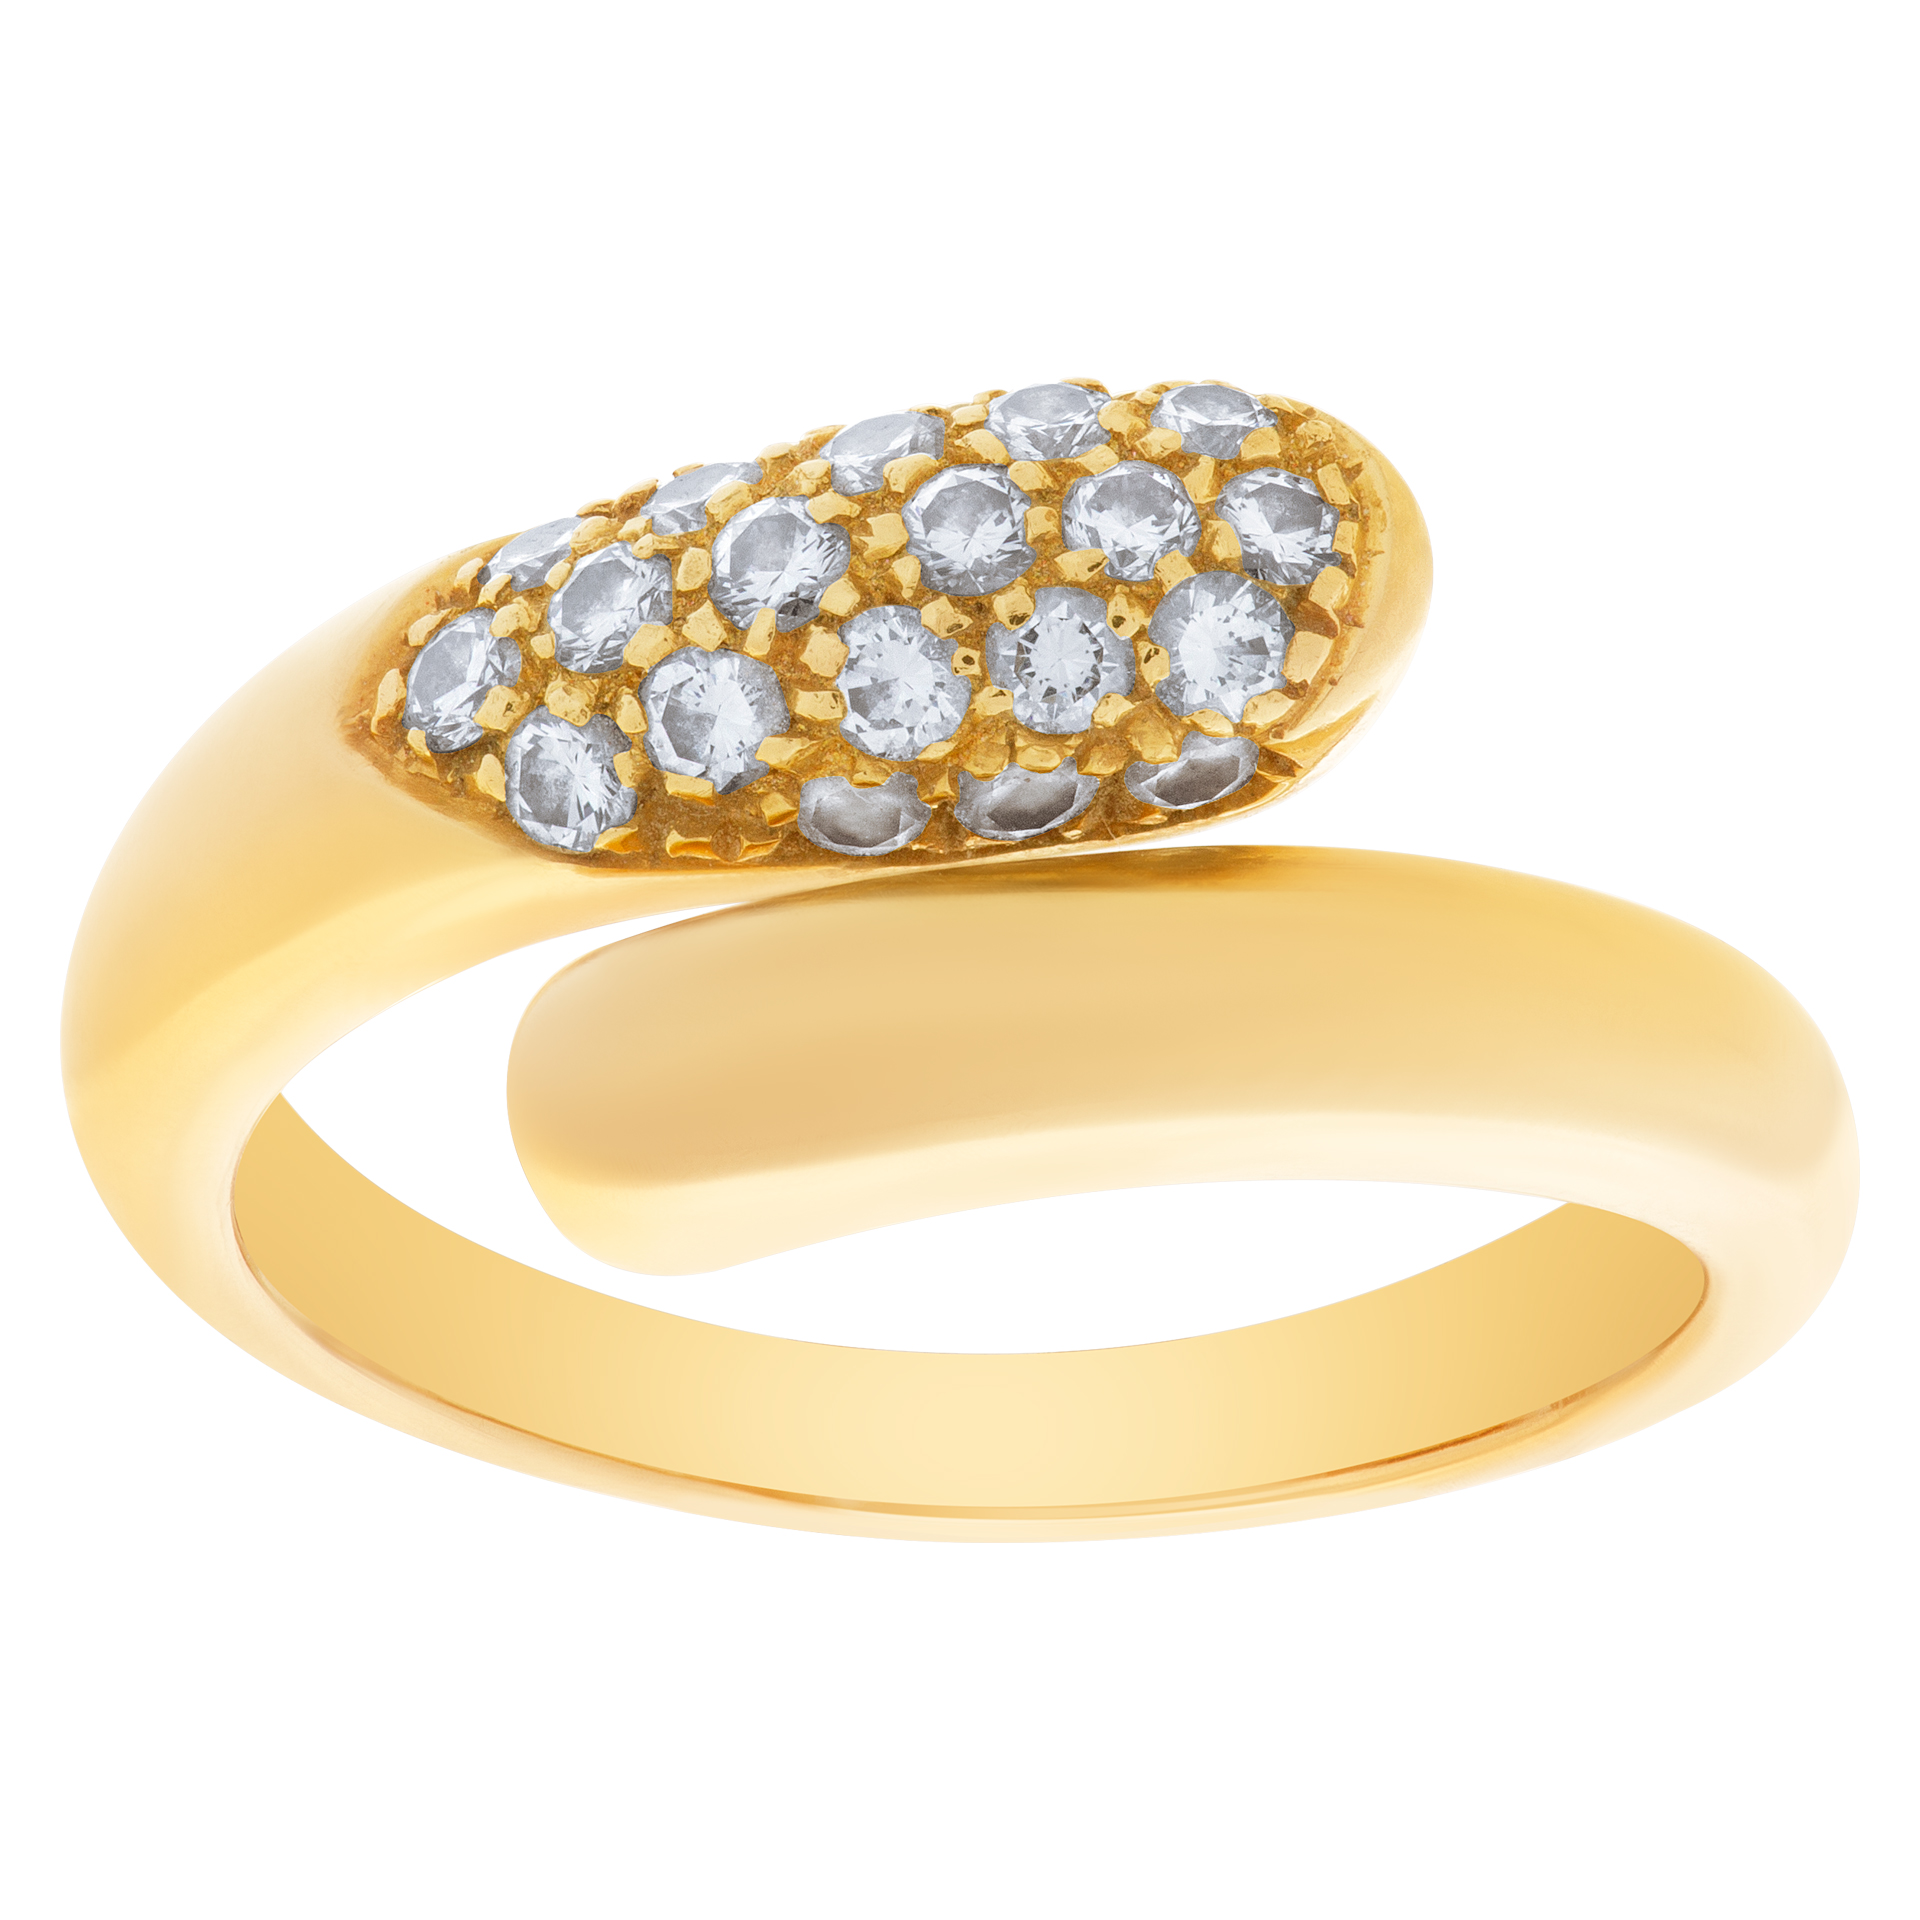 Bvlgari Pave diamond ring in 18k yellow gold 0.50 crats in diamonds (Stones)